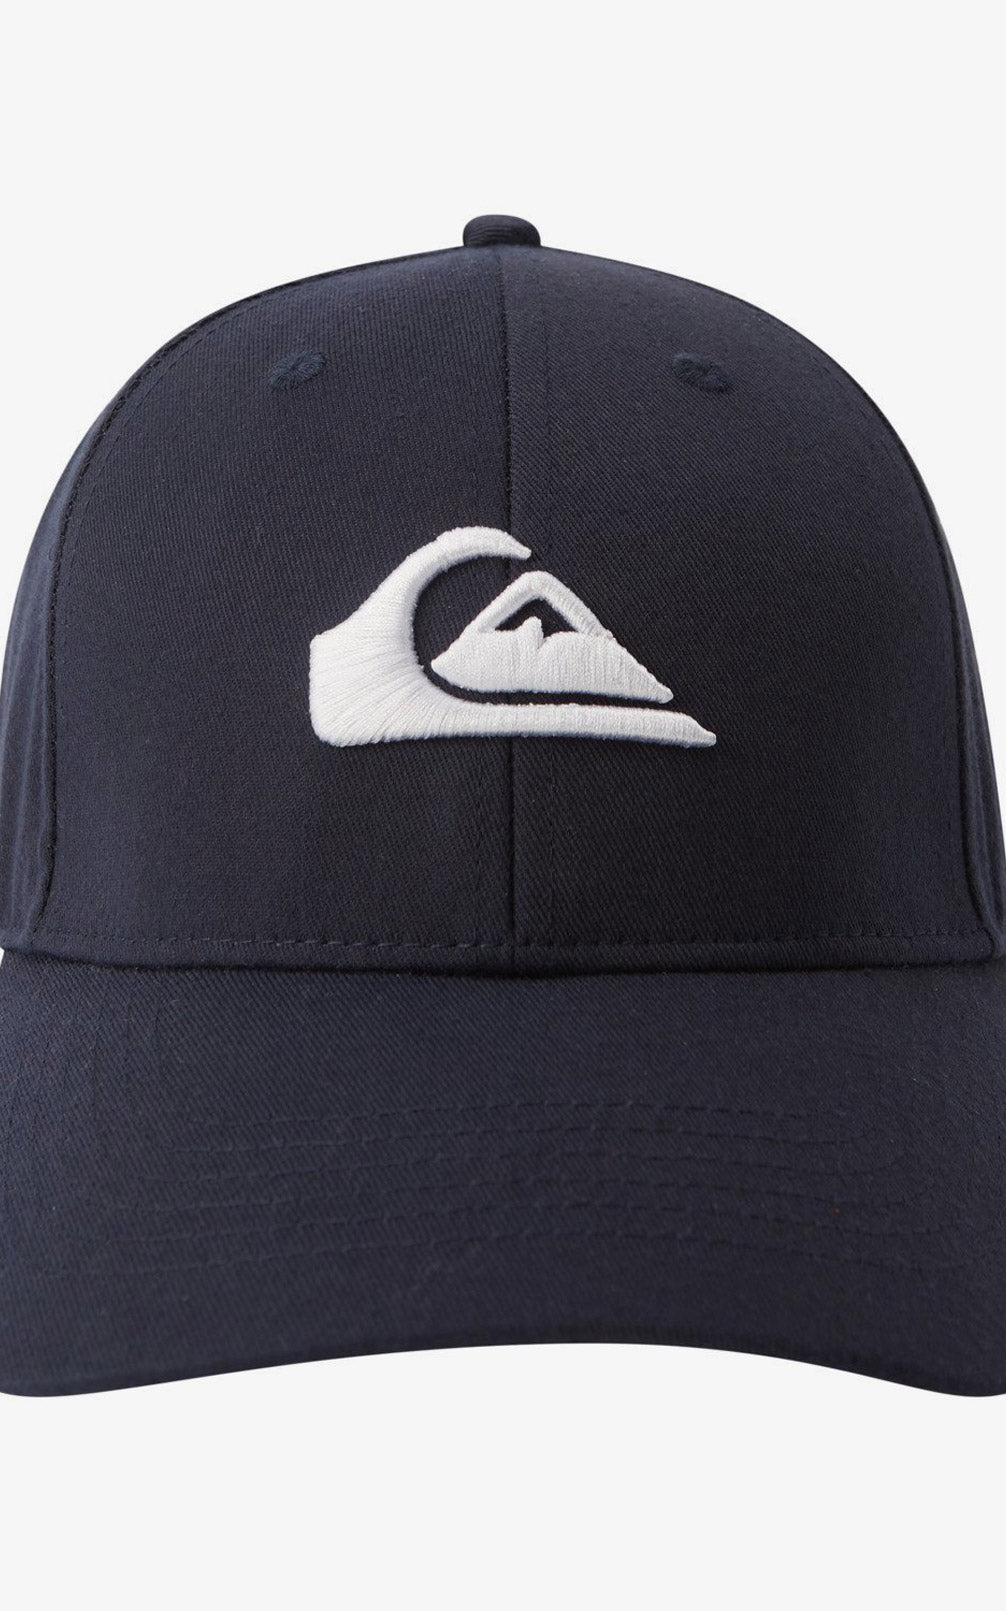 Quiksilver: Decades Snapback Hat